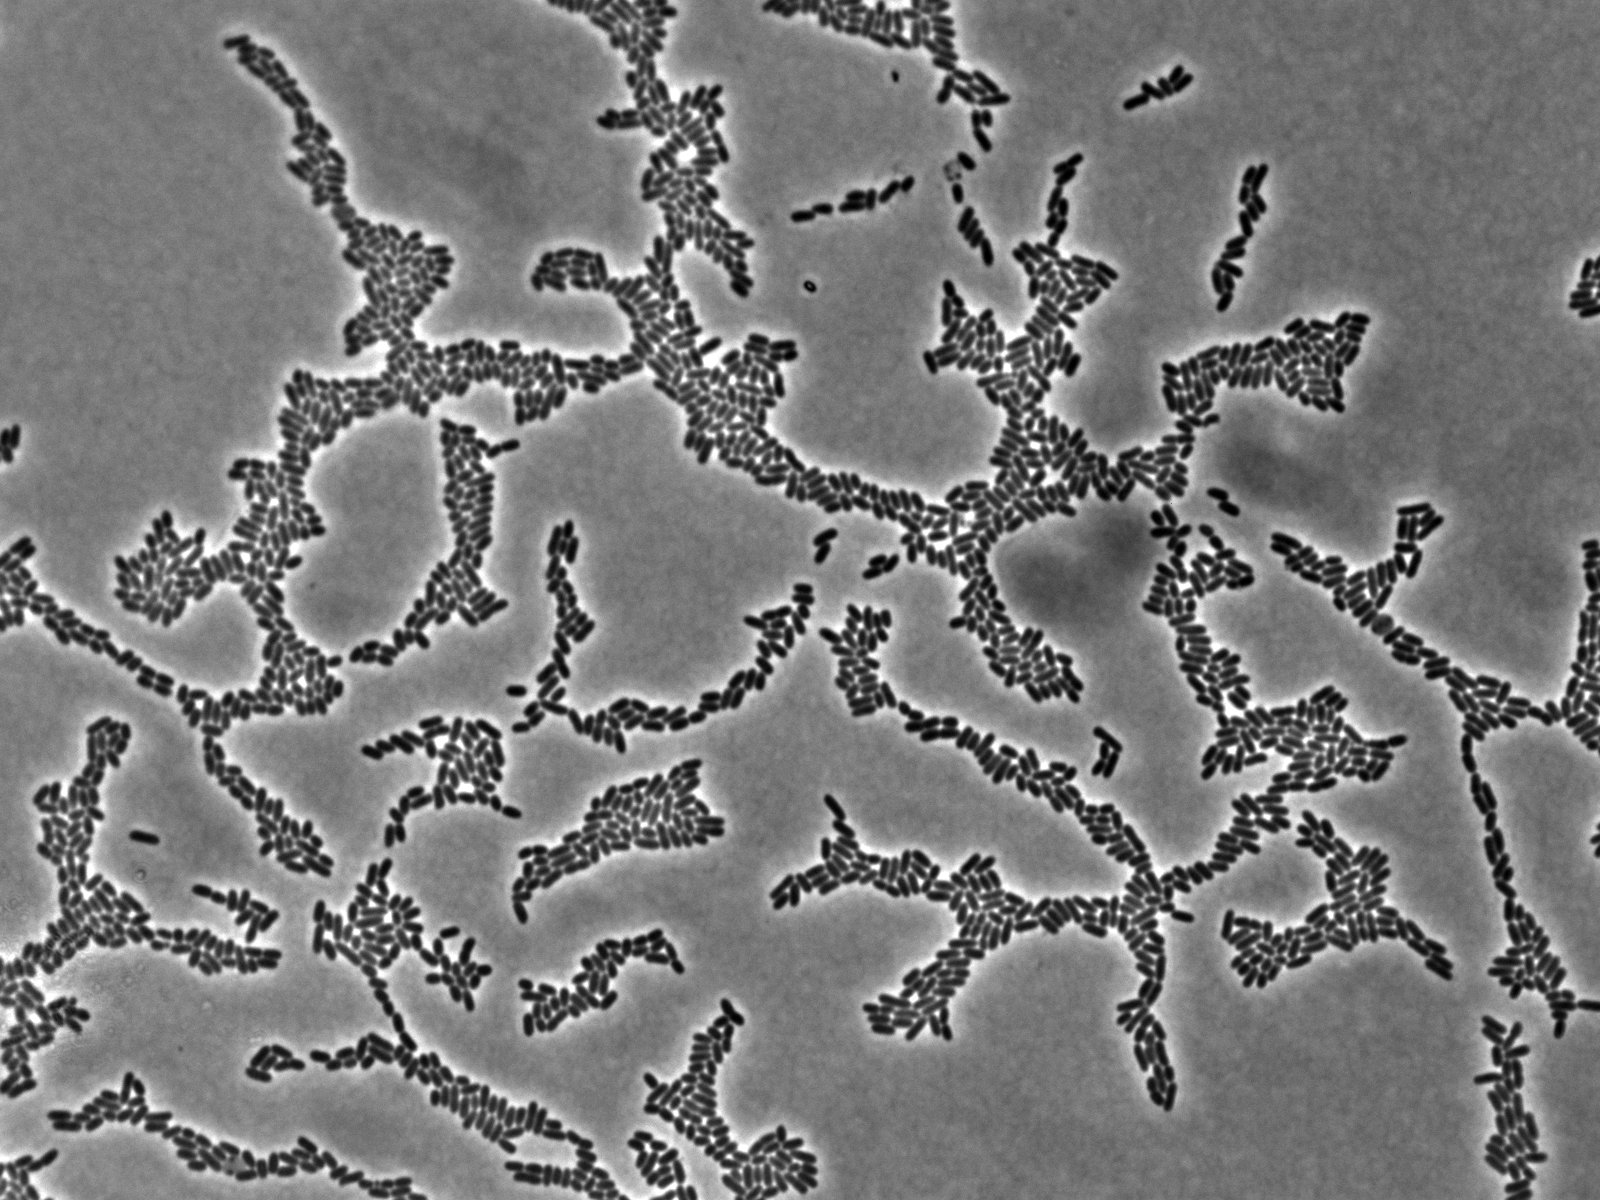 Pseudomonas aeruginosa bacteria colonising an agar surface.